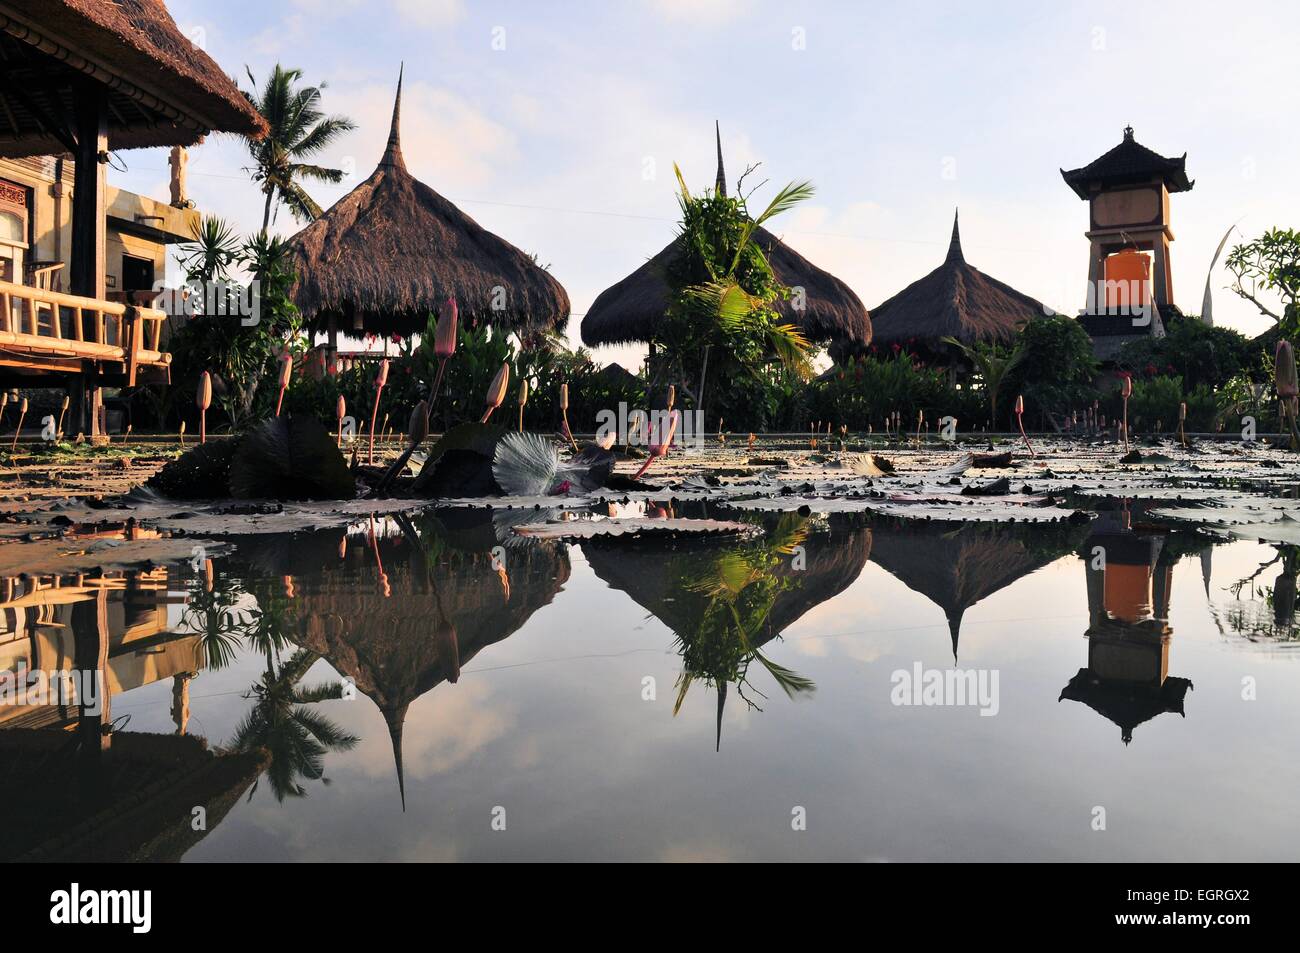 Traditionelle Stroh Bungalows in Reis Felder, Ubud, Bali Stockfoto